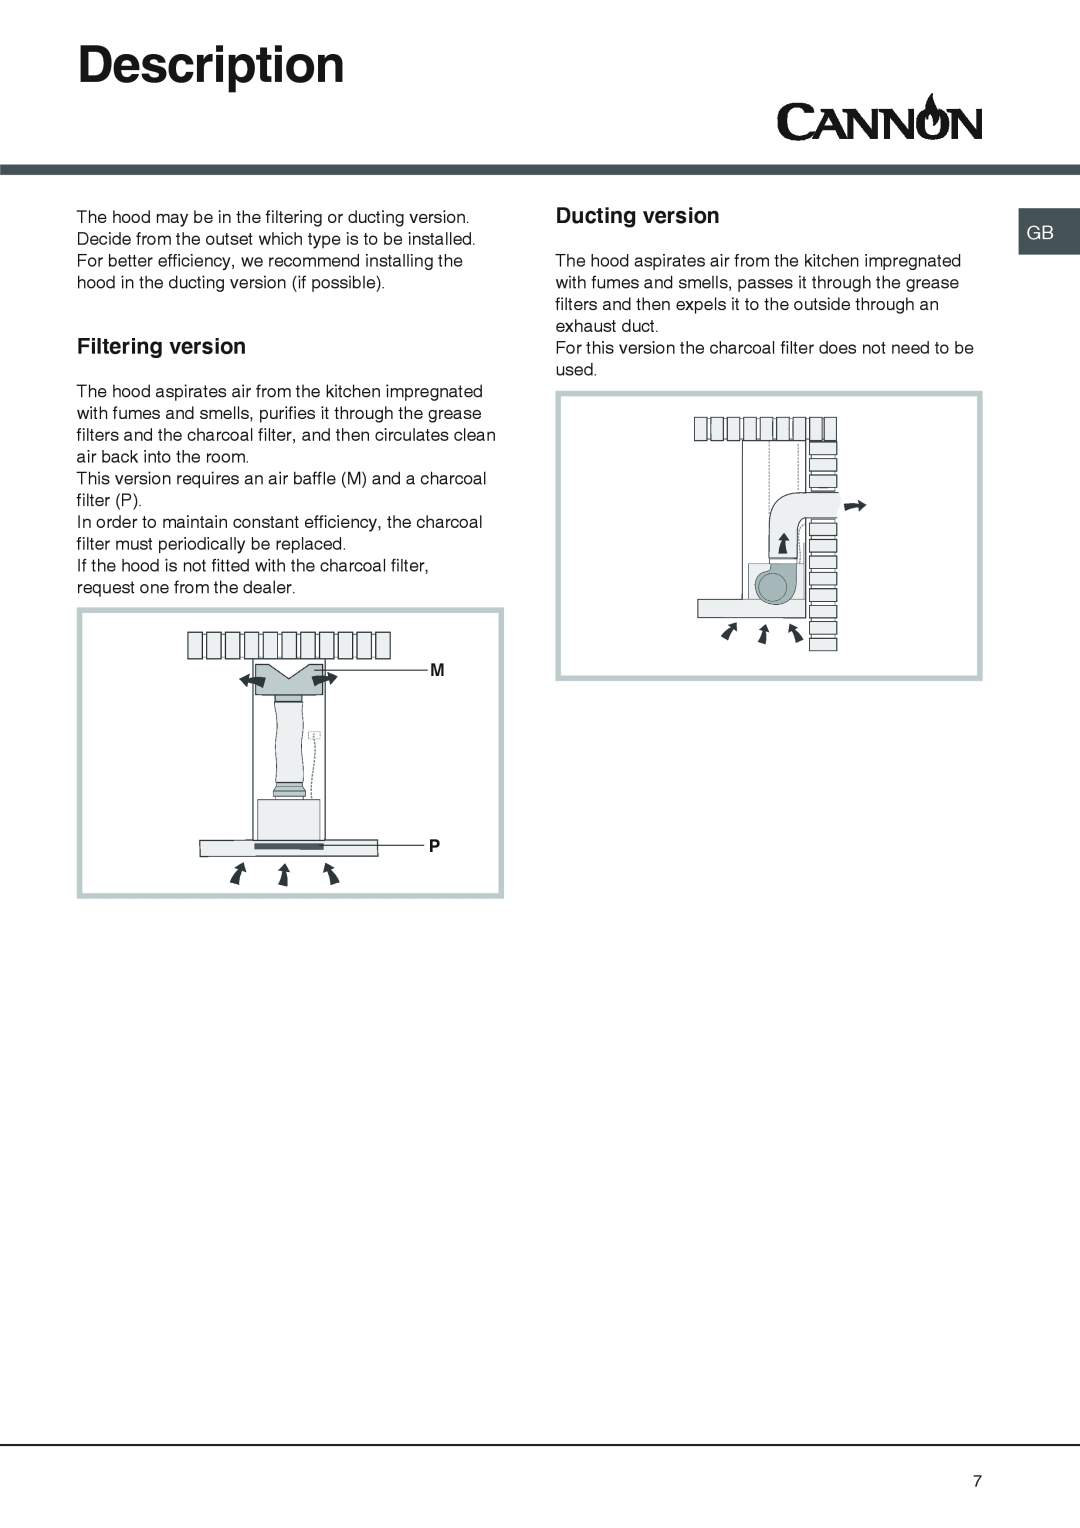 Cannon BHC110, BHC90 manual Description, Filtering version, Ducting version 